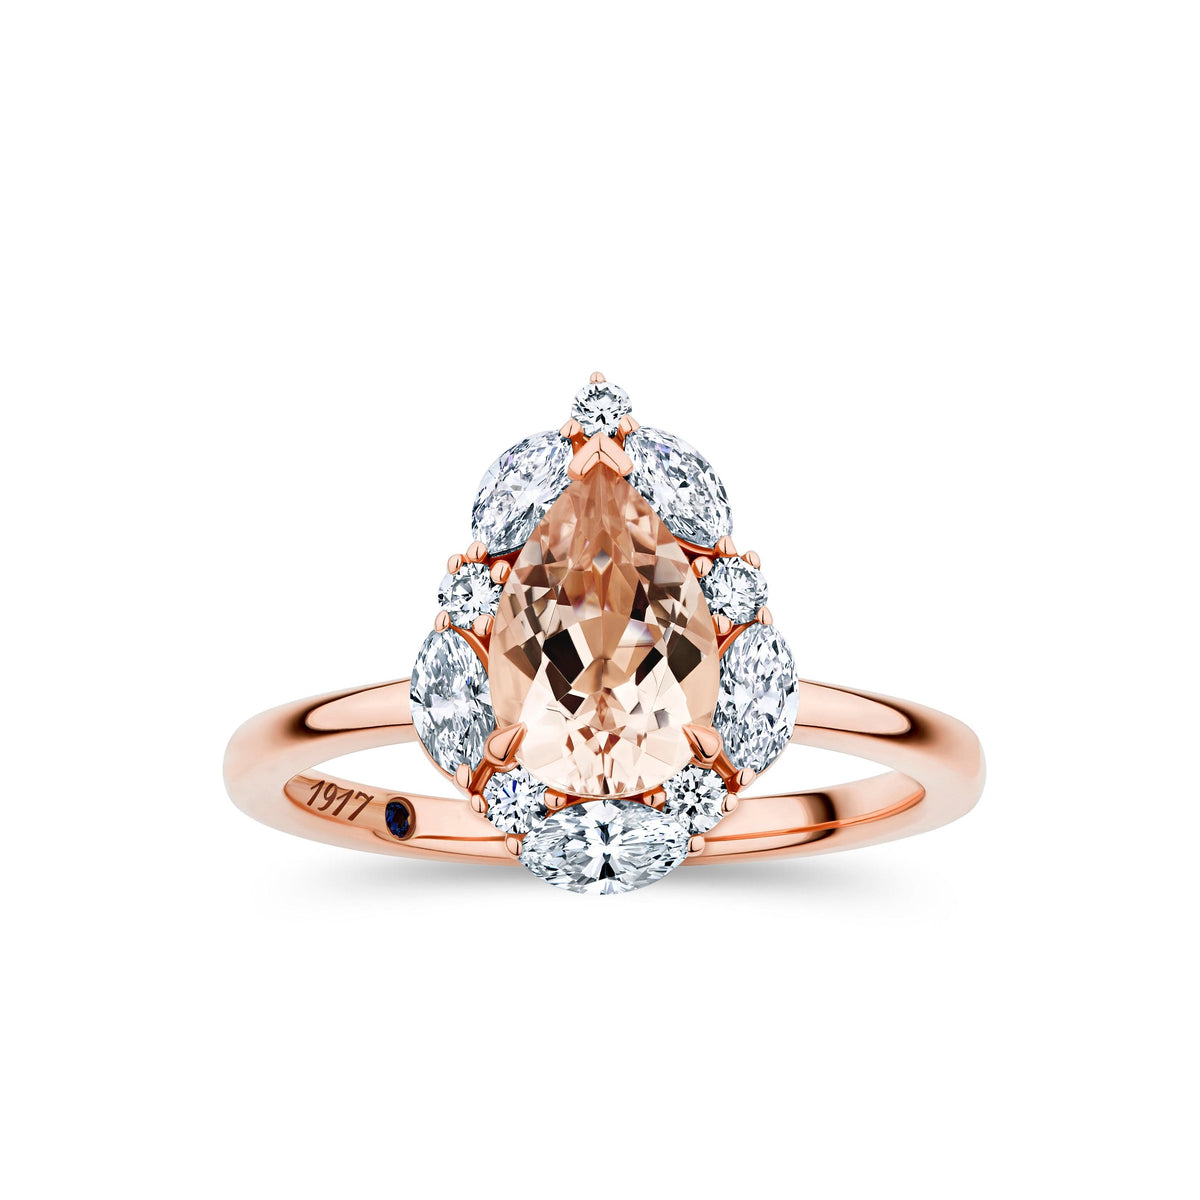 1917™ Morganite & 0.52ct TW Diamond Vintage Pear Halo Engagement Ring in 18ct Rose Gold - Wallace Bishop